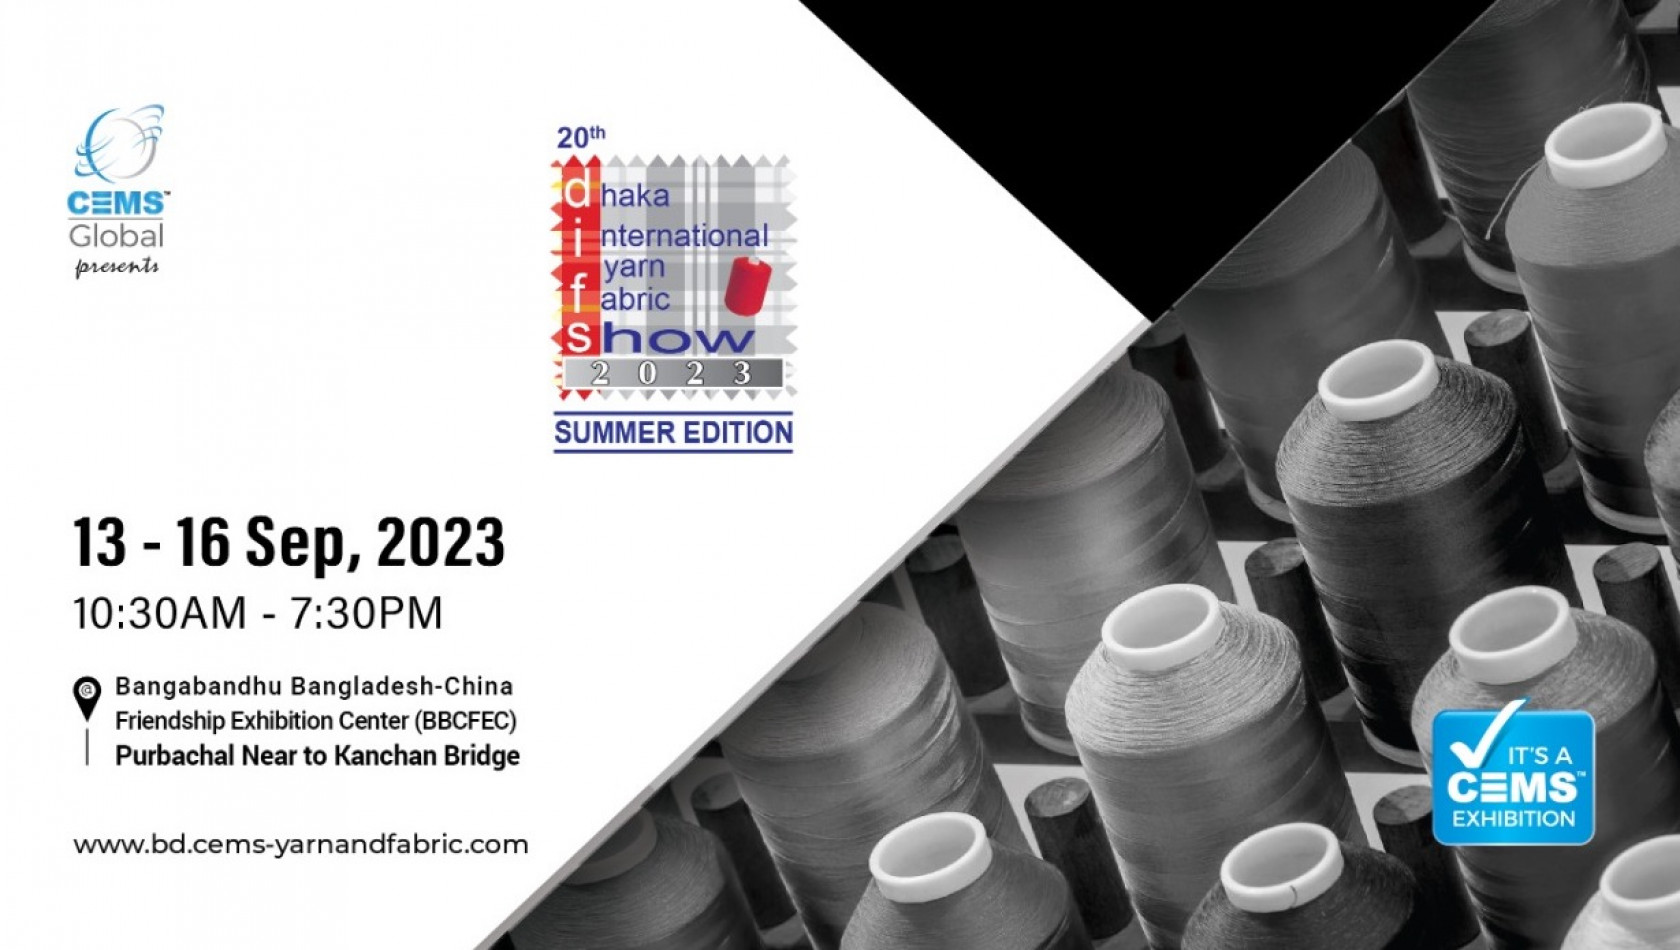 20th Dhaka International Yarn & Fabric Show 2023 (Summer Edition) from 13 ~ 16 September 2023